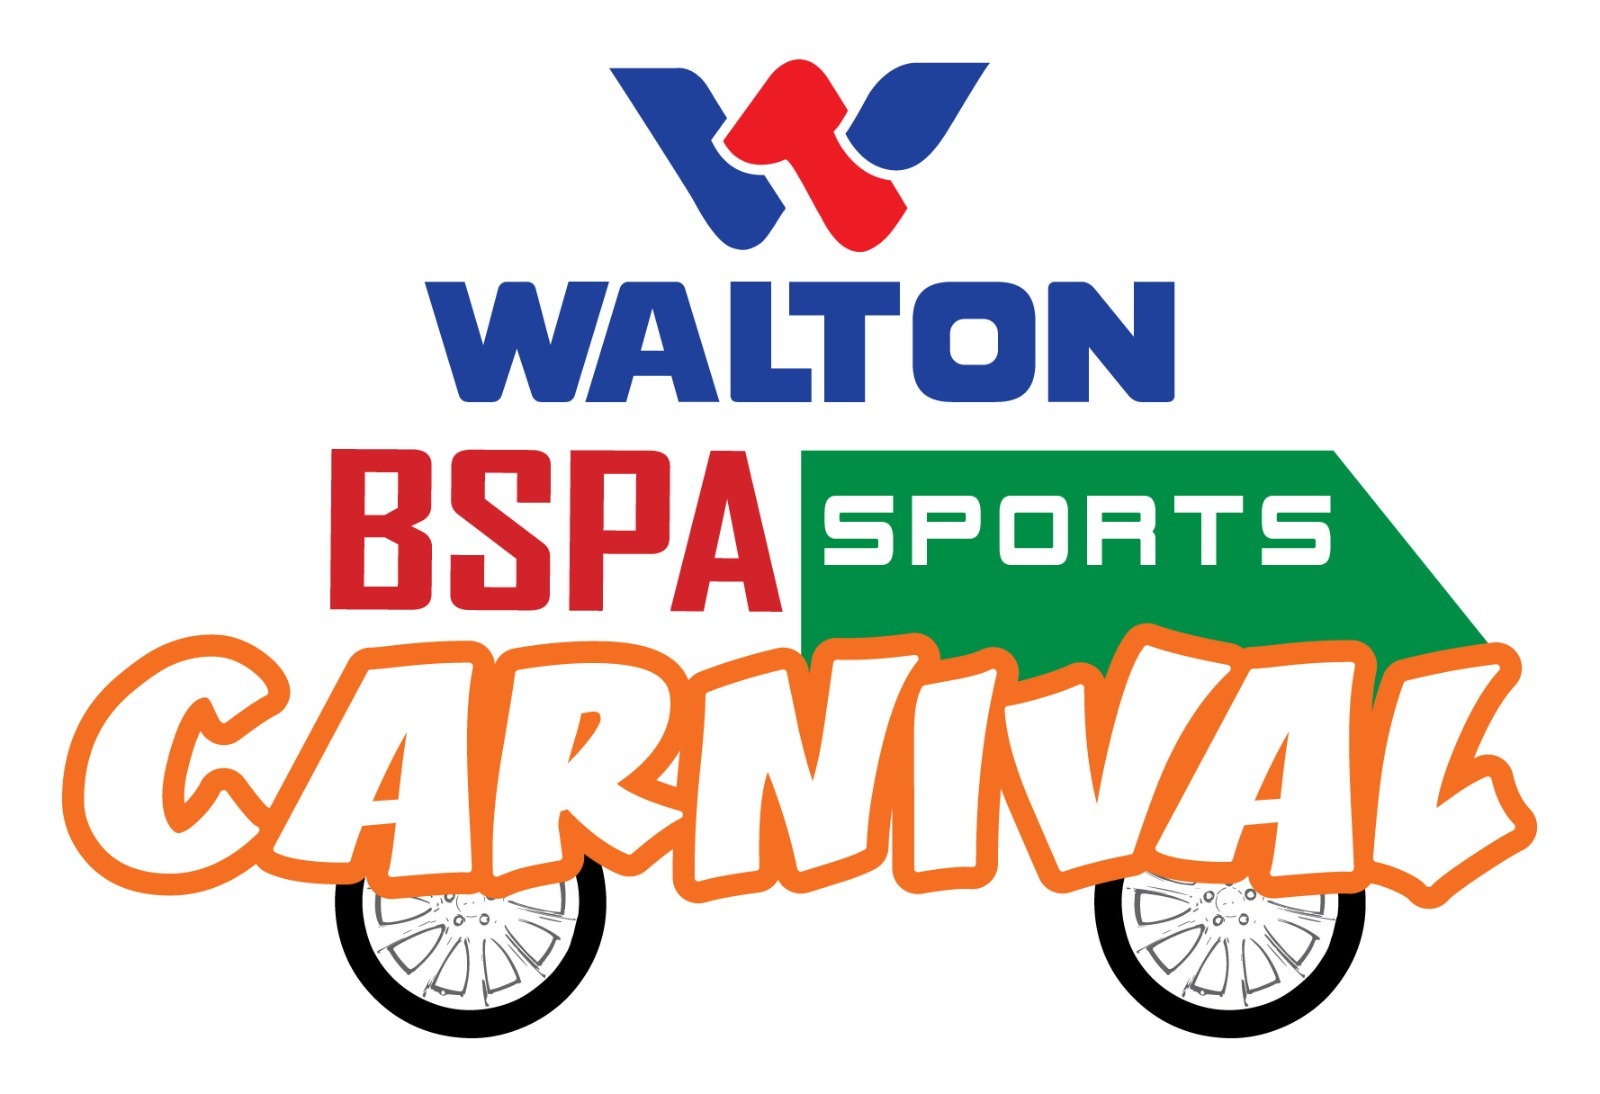 WALTON BSPA Award